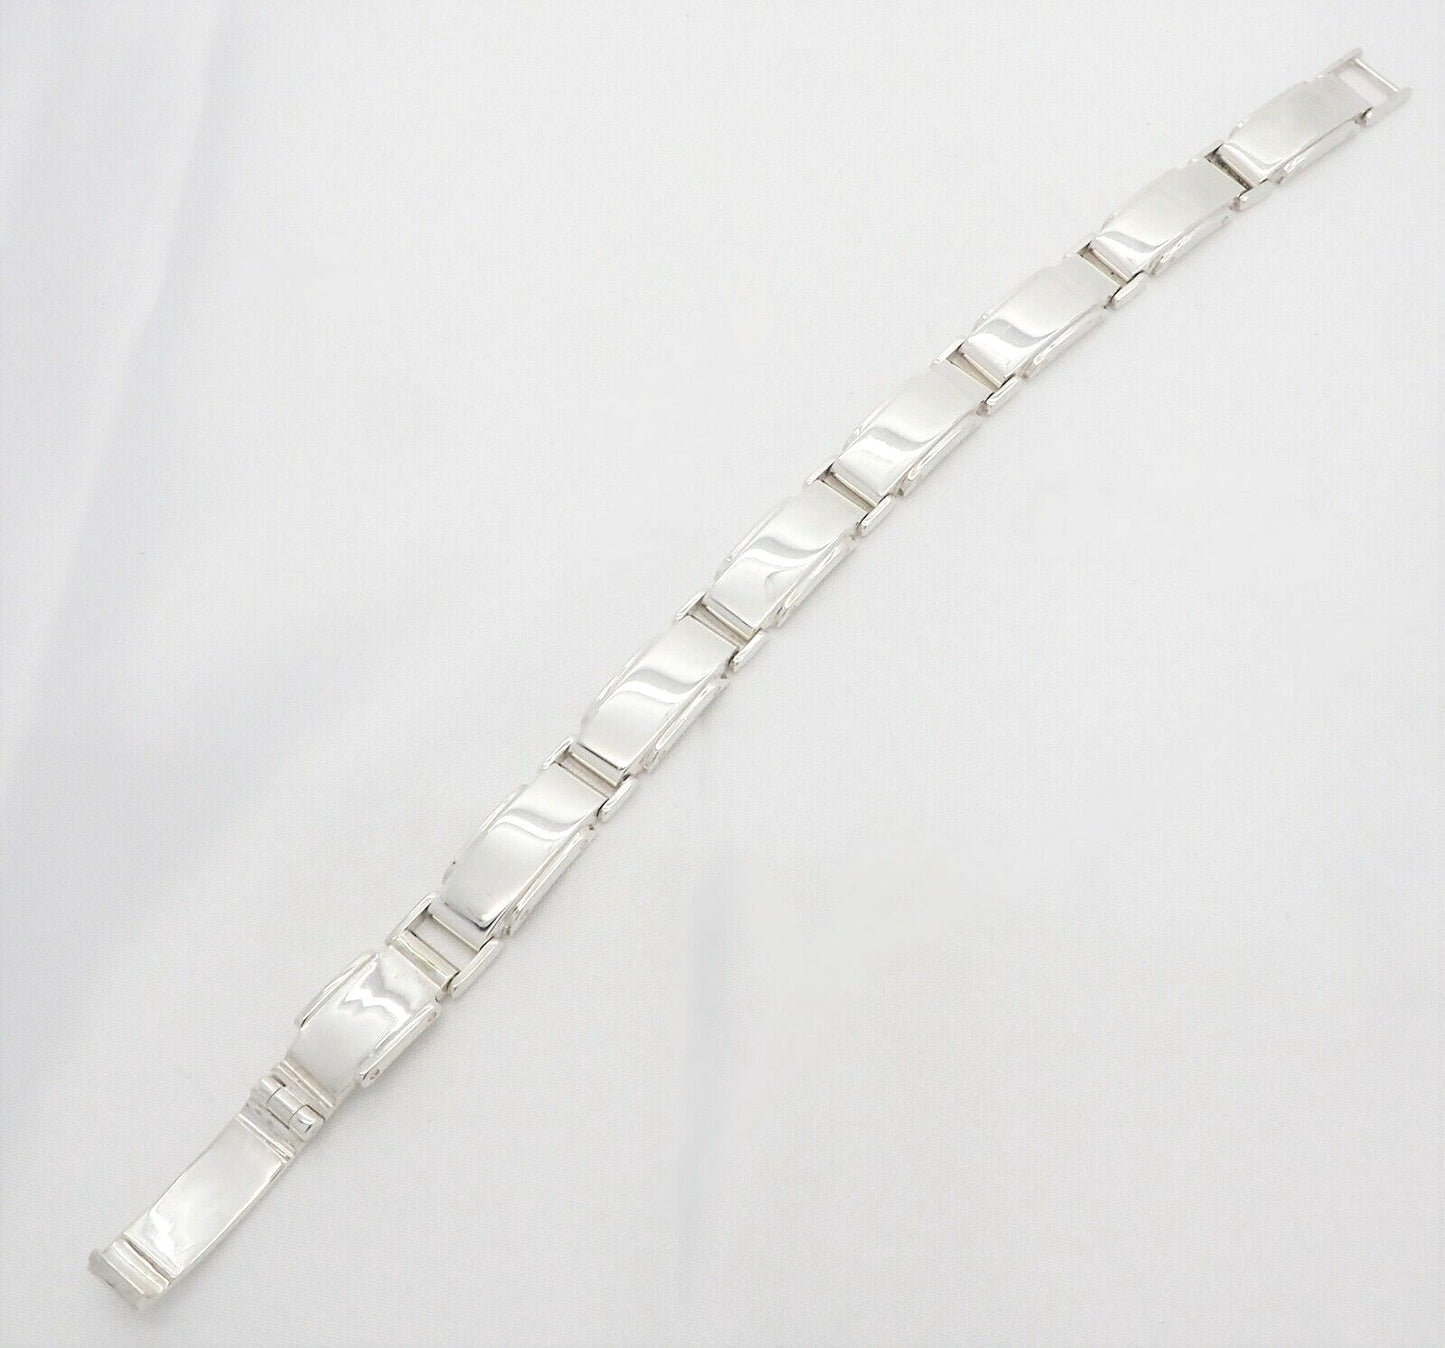 Tiffany & Co. Sterling Silver Smooth Bracelet, Length 8.25" - 59.3g